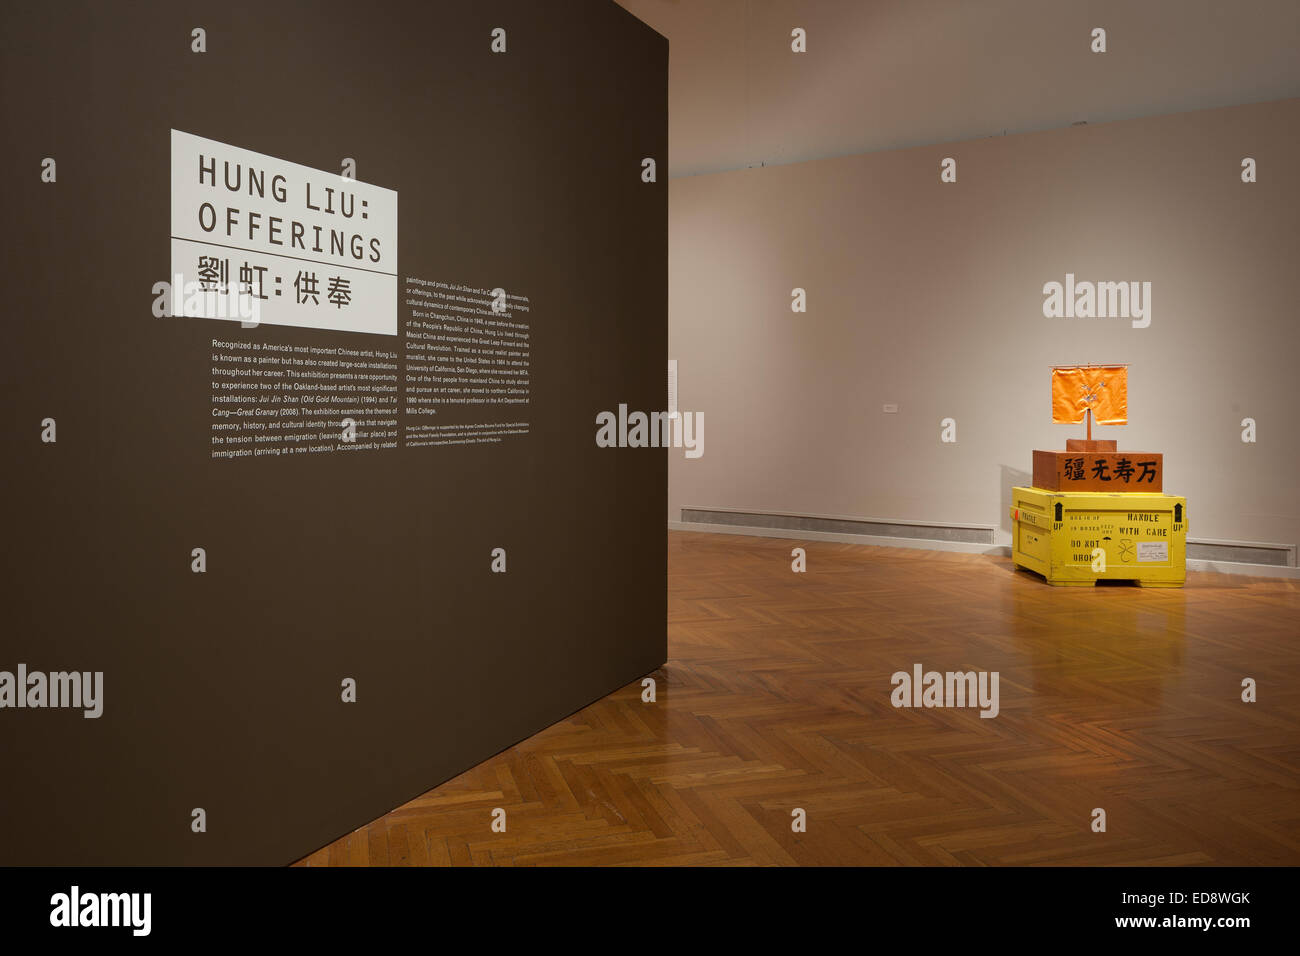 Chinesische Amerikanerin Hung Liu. Angebote-Ausstellung im Kunstmuseum Mills College. Stockfoto